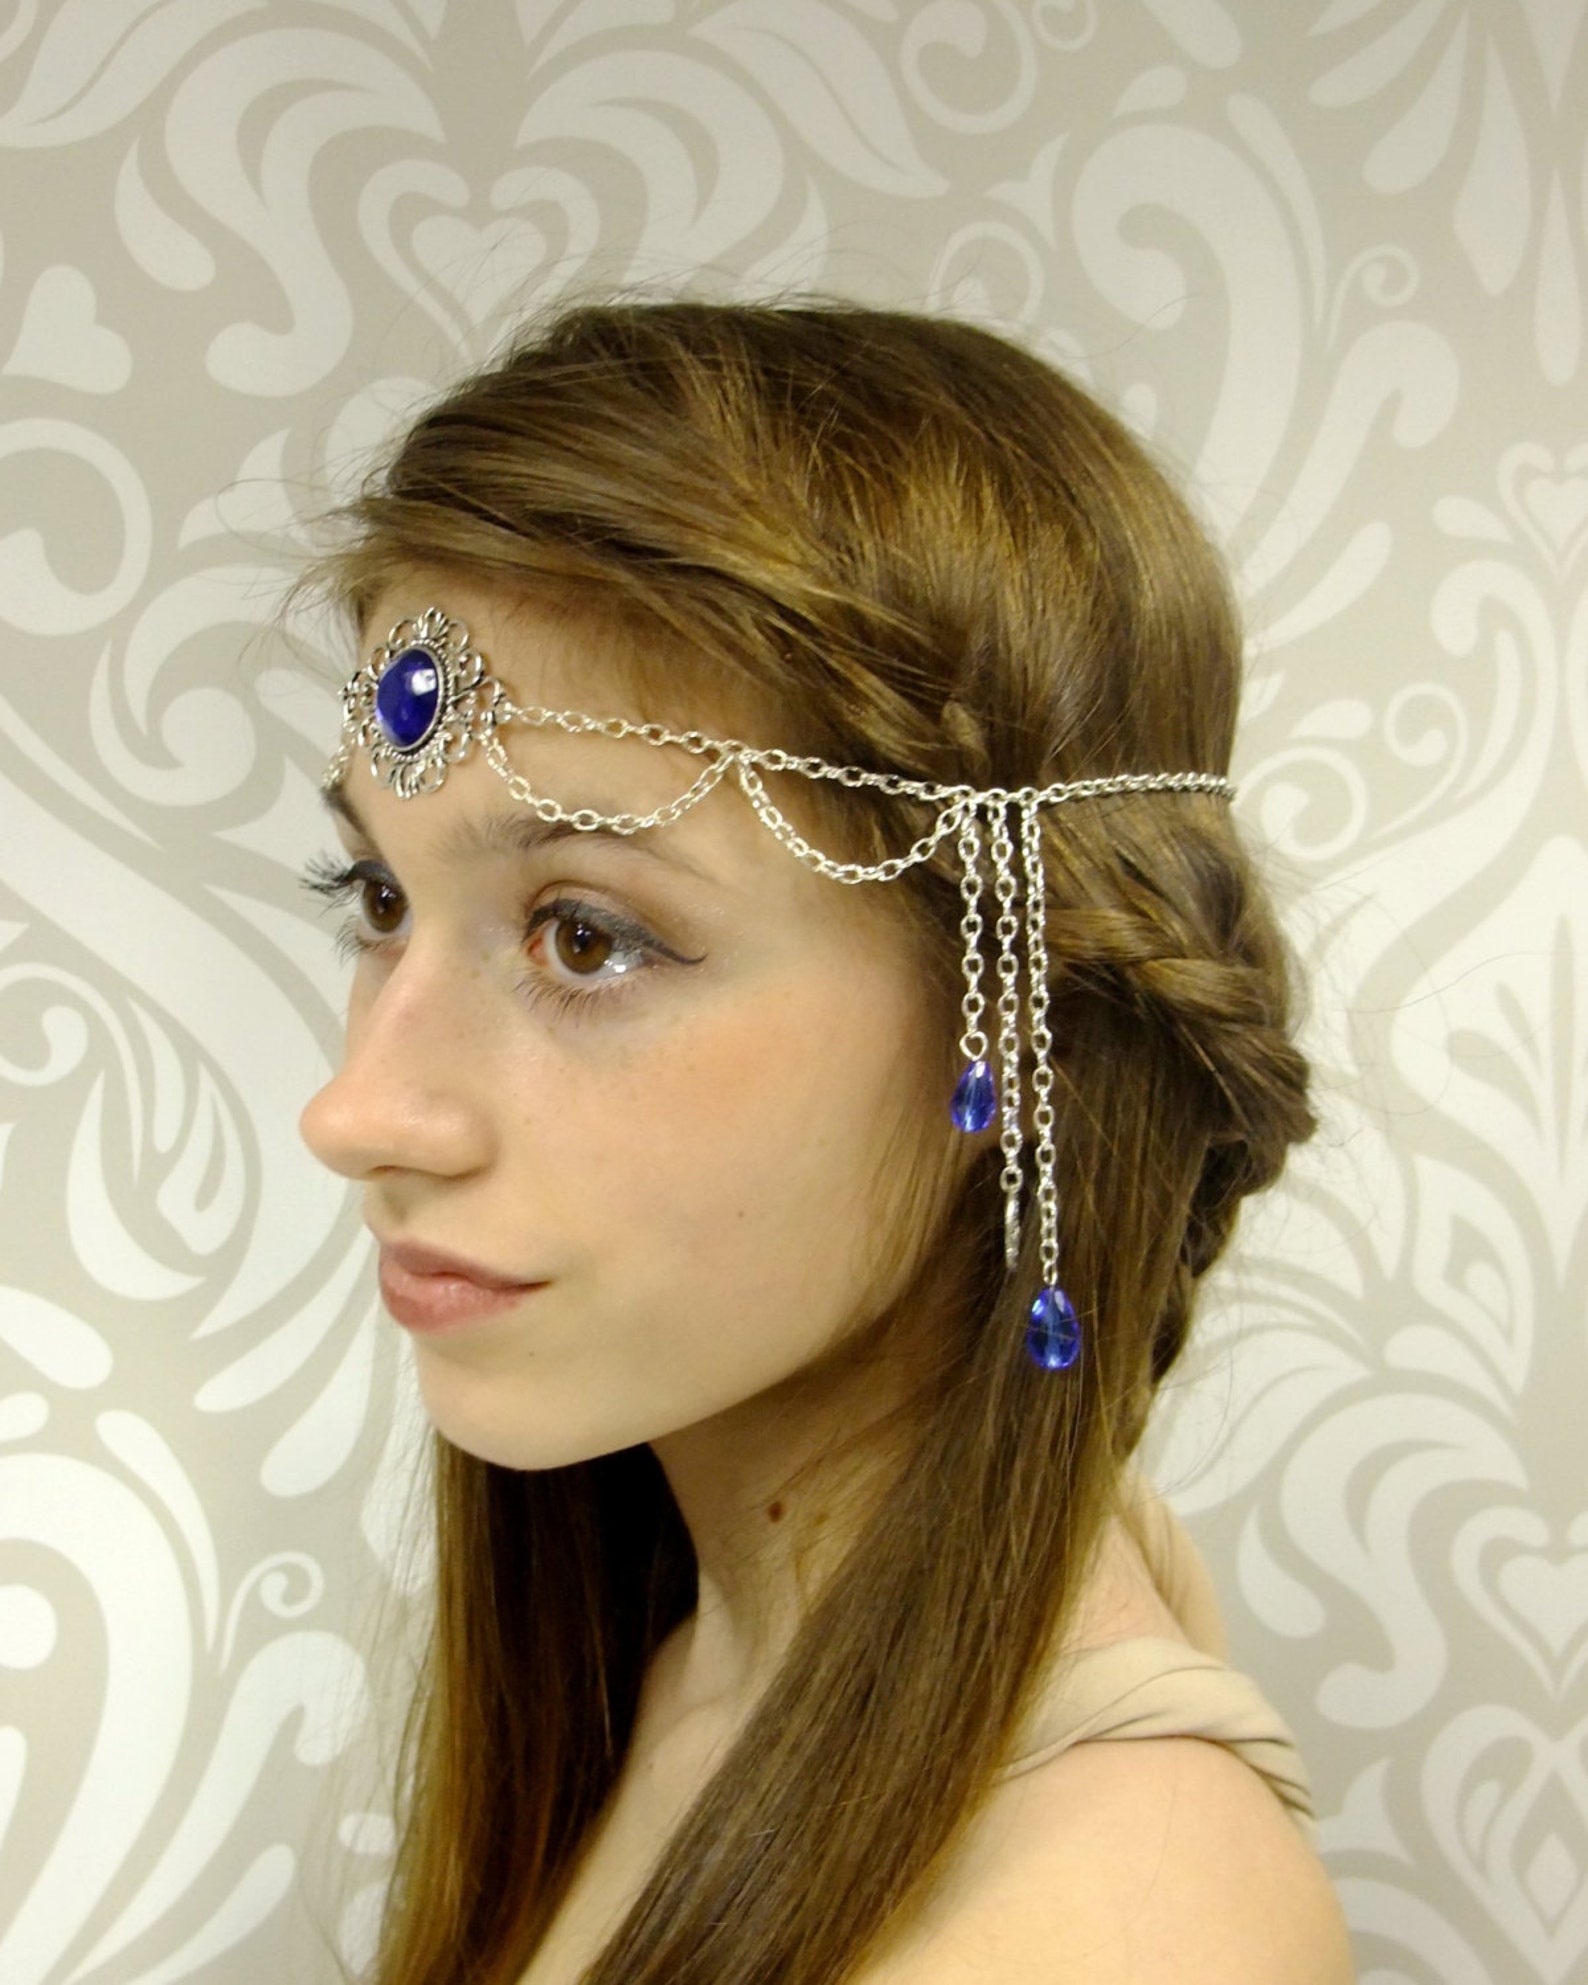 Cobalt Blue and Silver Circlet Headpiece Elven Circlet Crown - Etsy